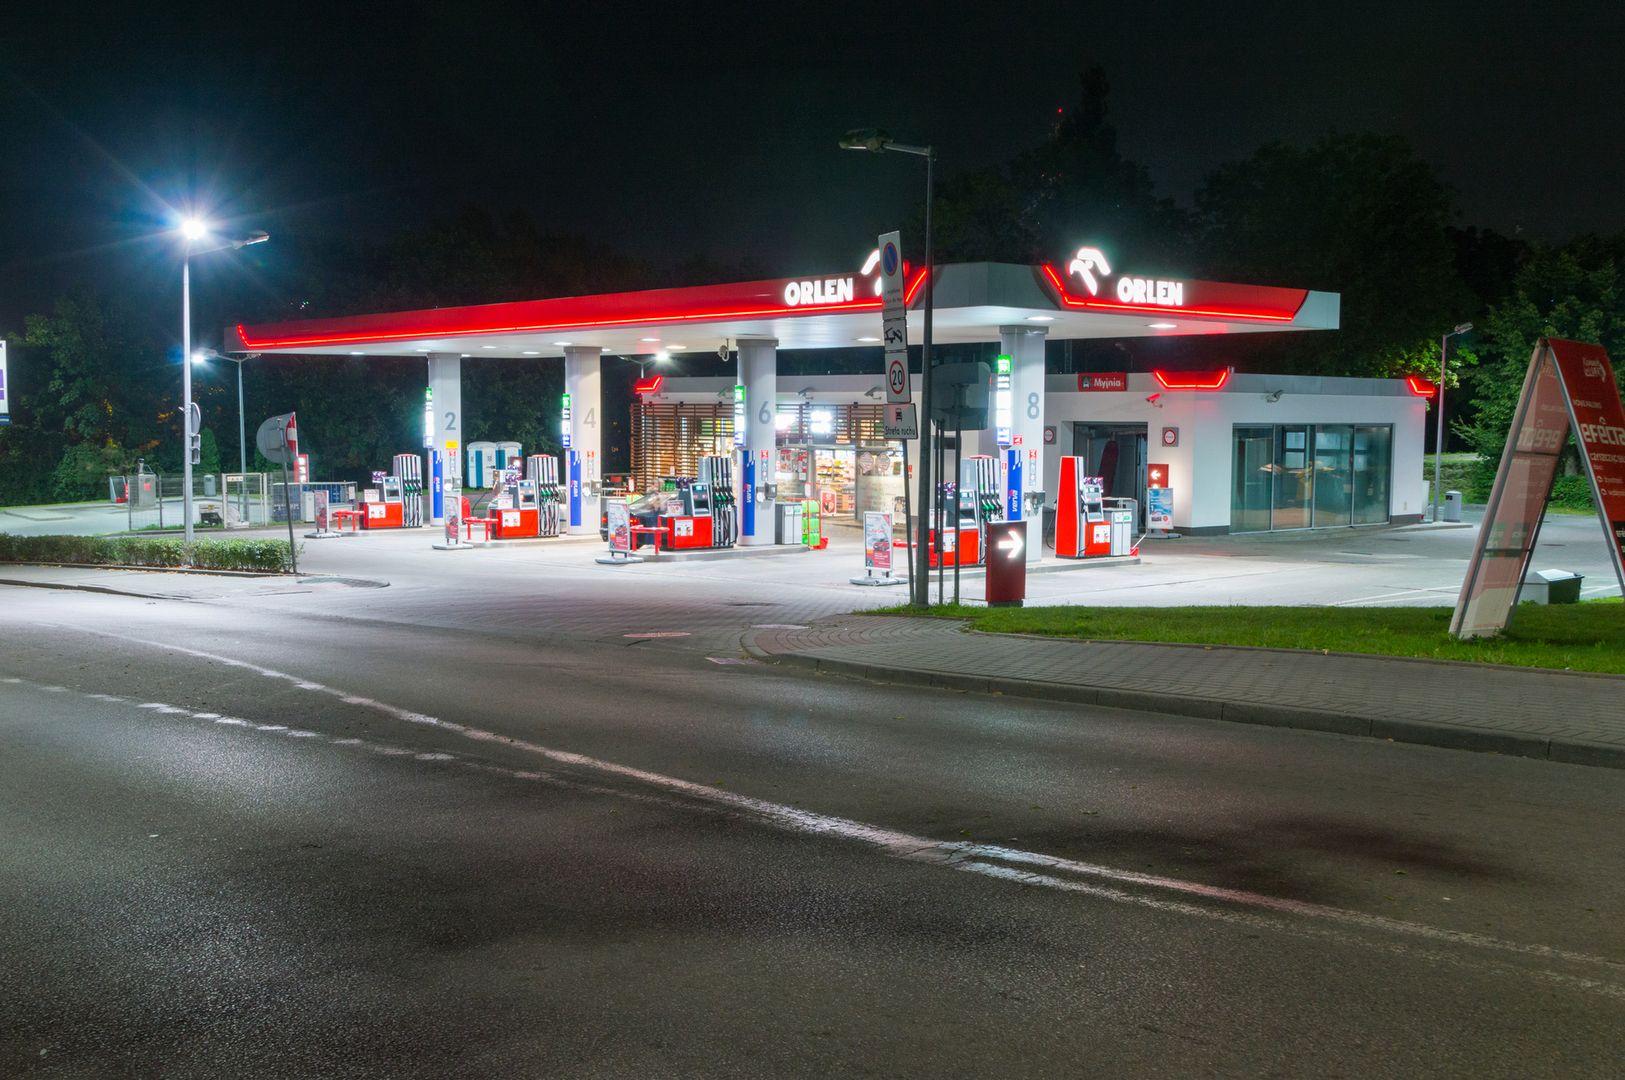 Gdansk, Poland - August 26, 2018: Orlen gas station at night.